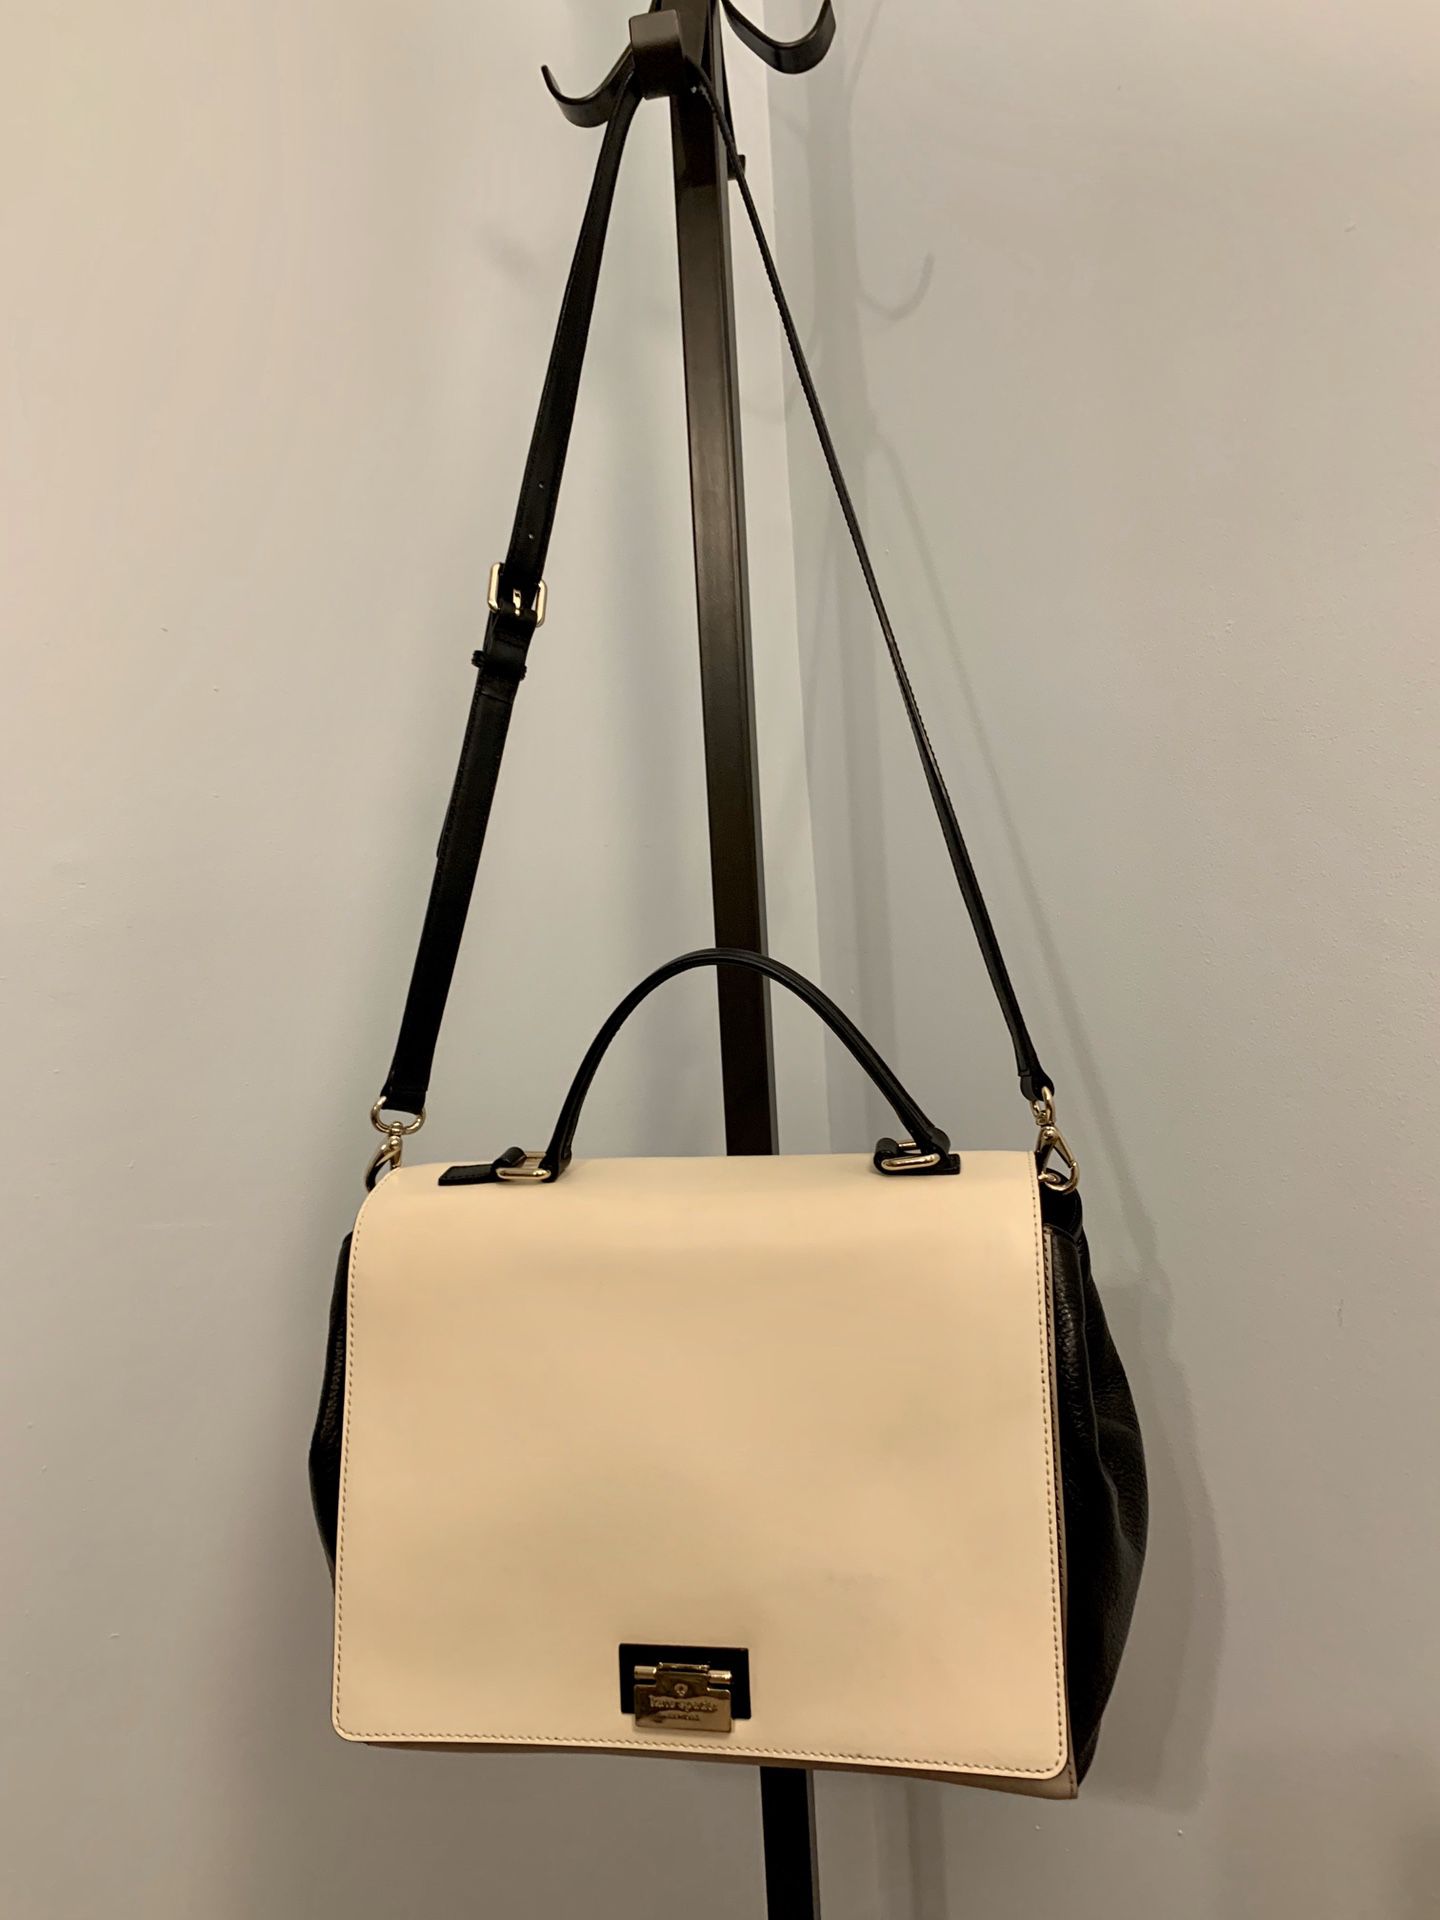 Kate Spade Leather Satchel/Handbag, Cream & Black